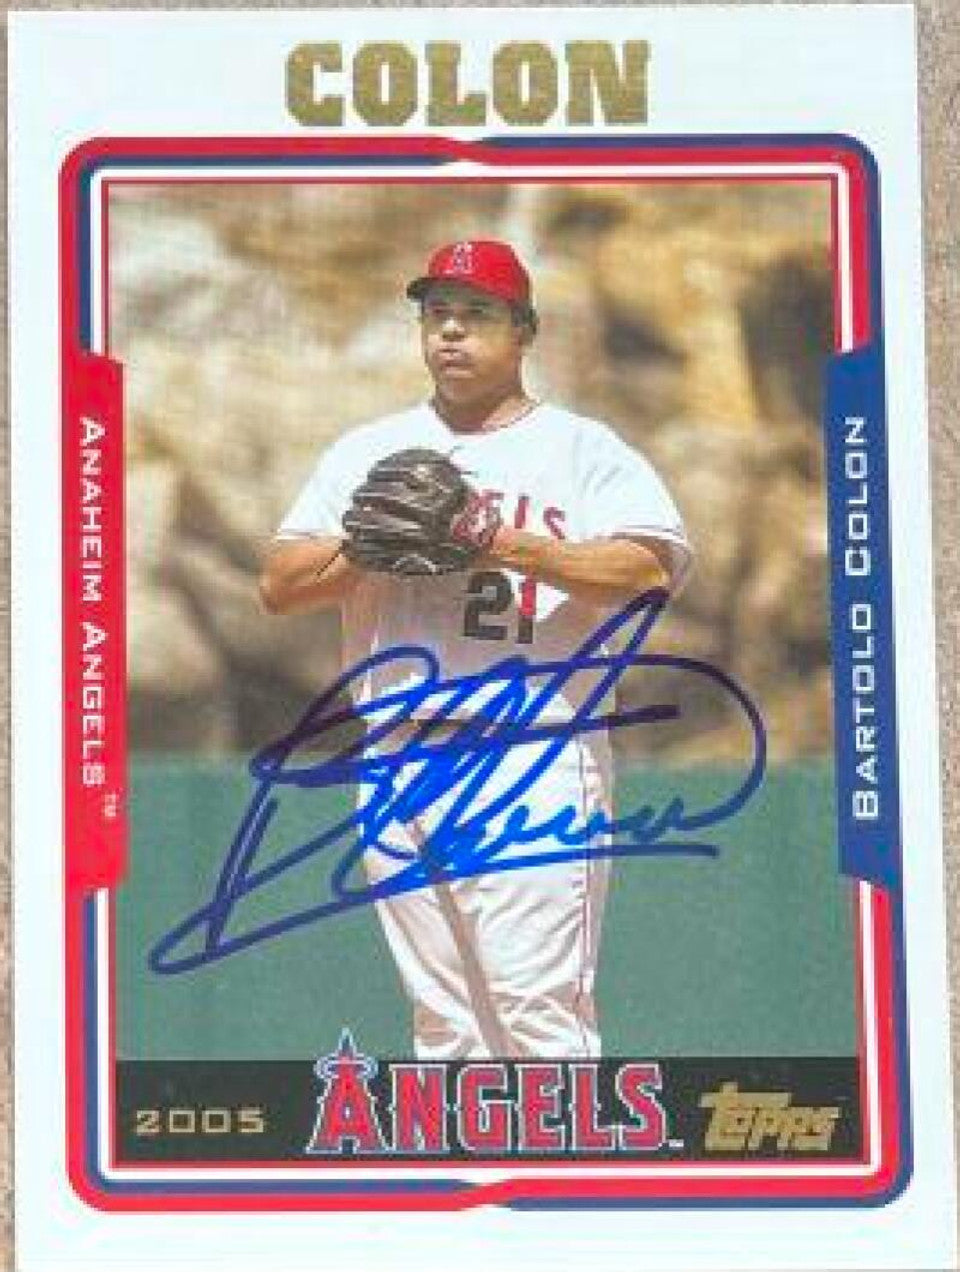 Bartolo Colon Signed 2005 Topps Baseball Card - Anaheim Angels